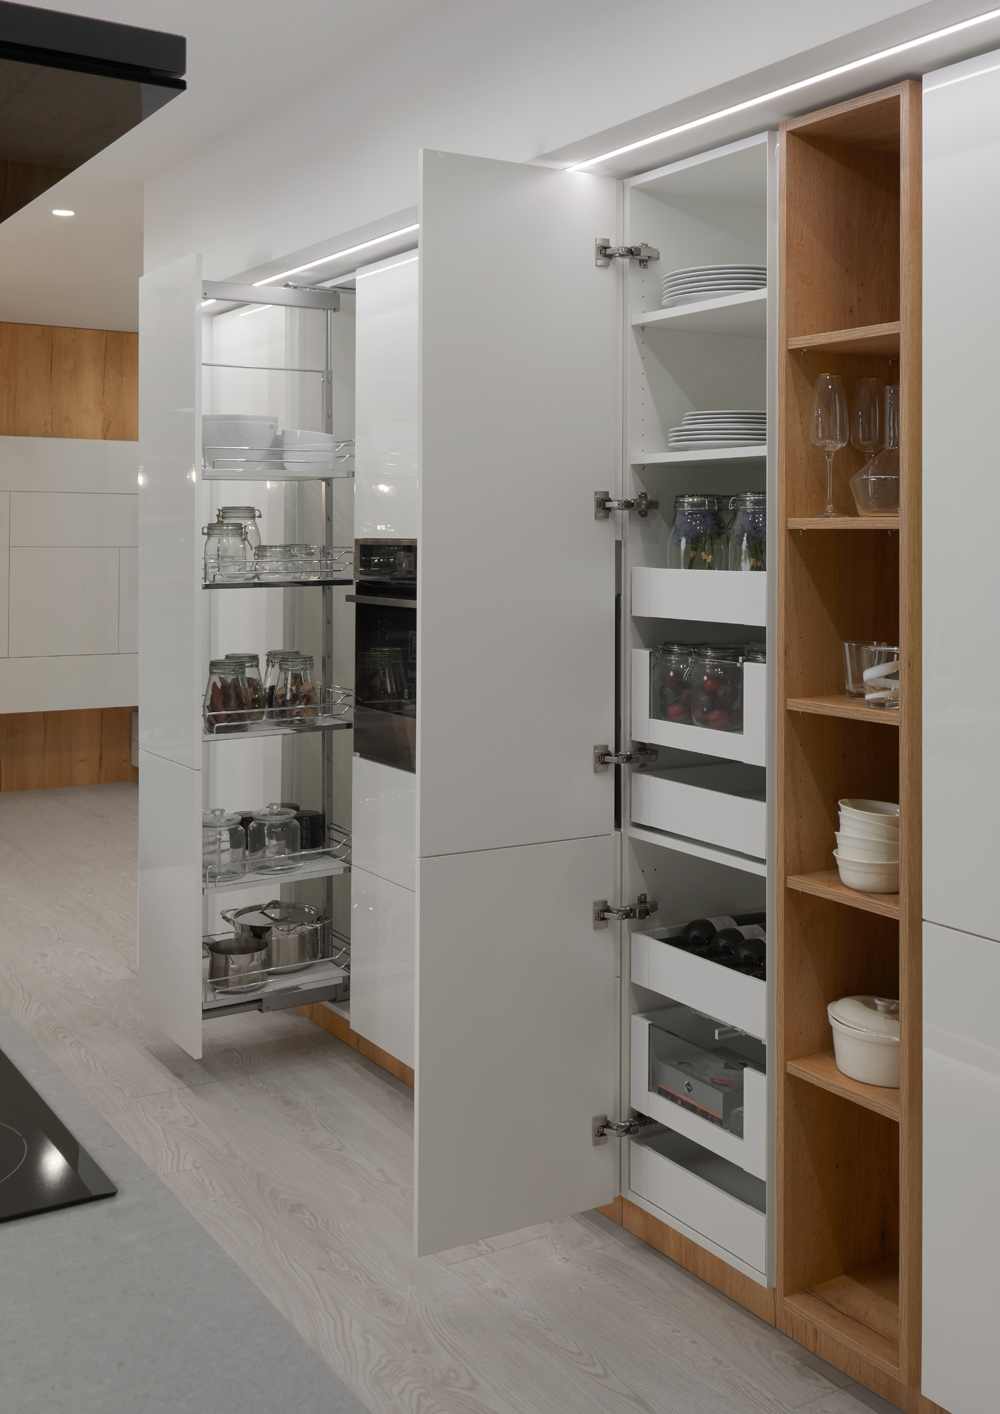 Hanák White kitchen Storage space